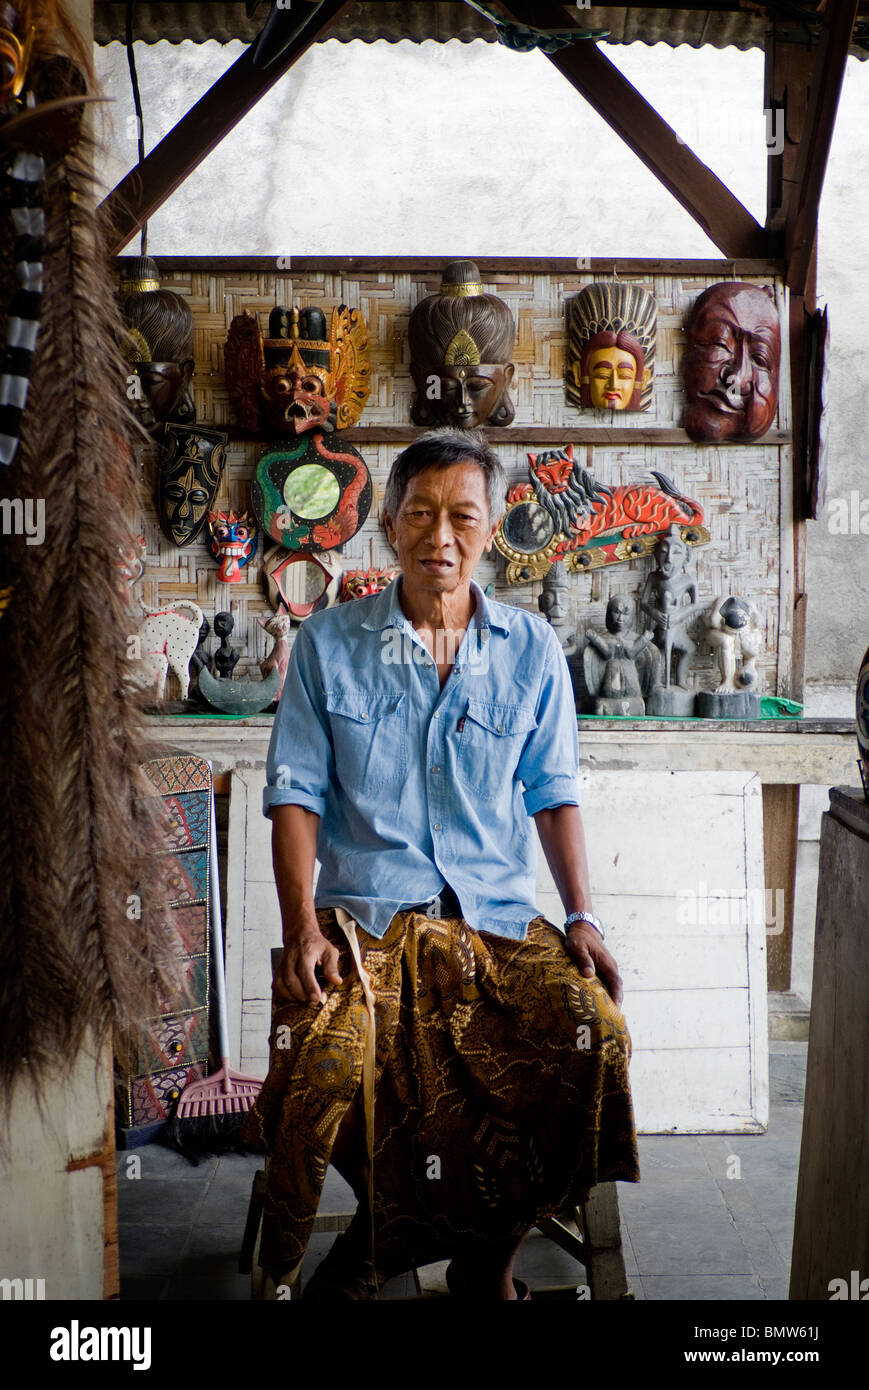 A Balinese mask maker waits for customers at the Ubud, Bali Public Market. The masks are Hindu themed figures in mythology. Stock Photo